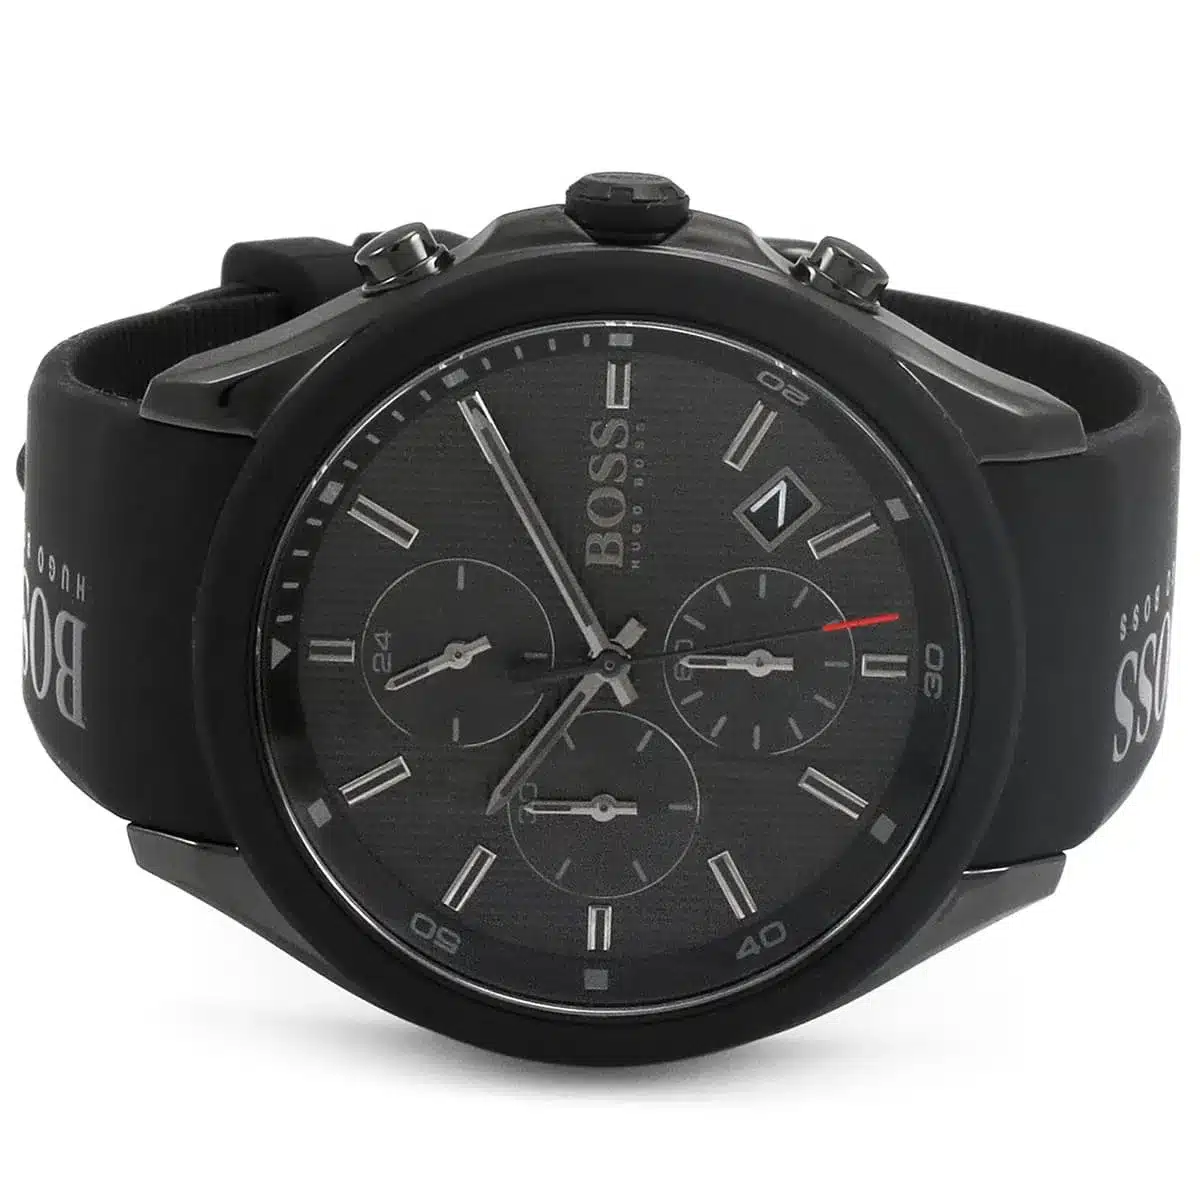 Hugo Boss Men's Watch Velocity 1513720 | Watches Prime